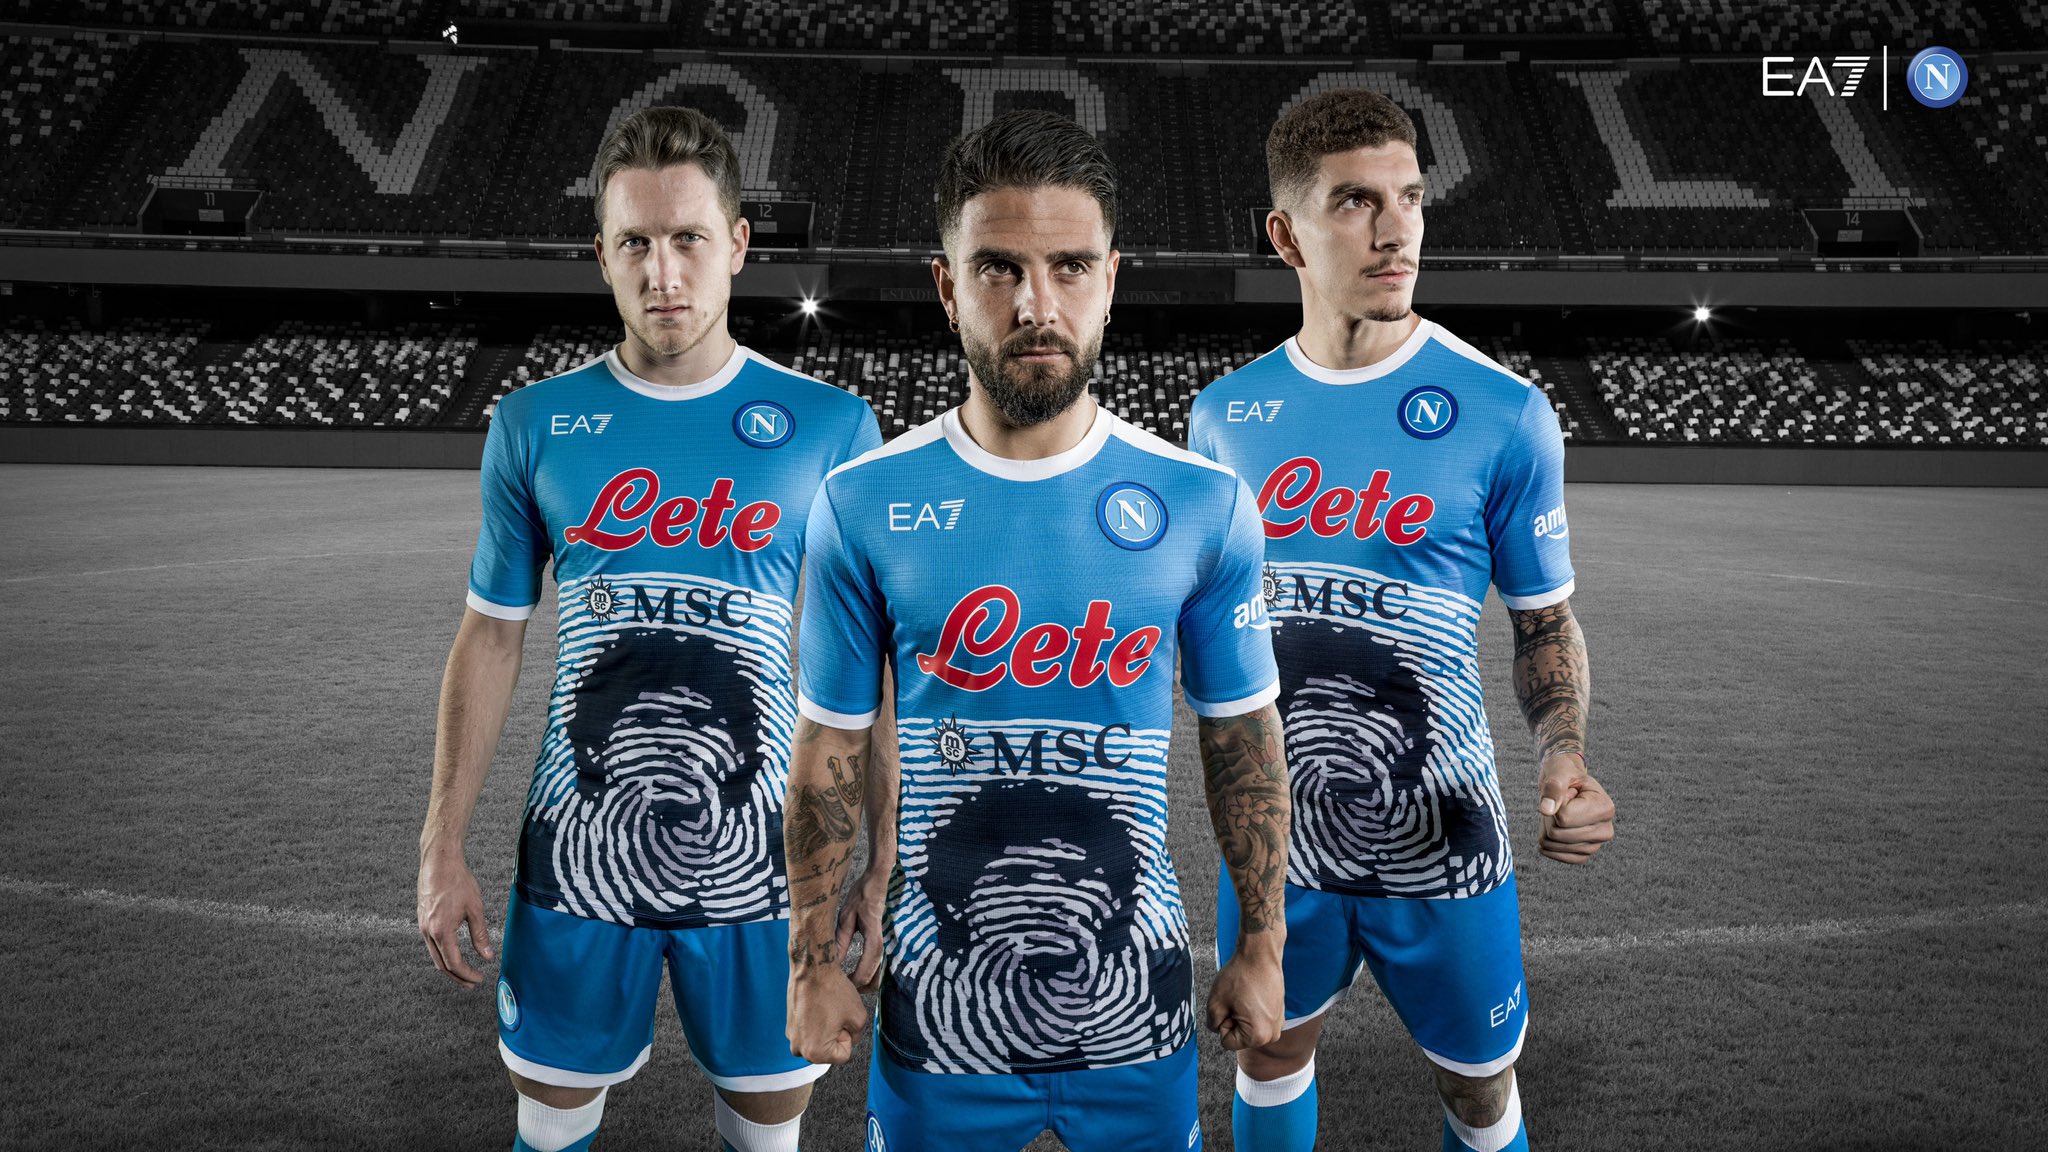 Maglia Napoli Maradona 2022 Limited Edition